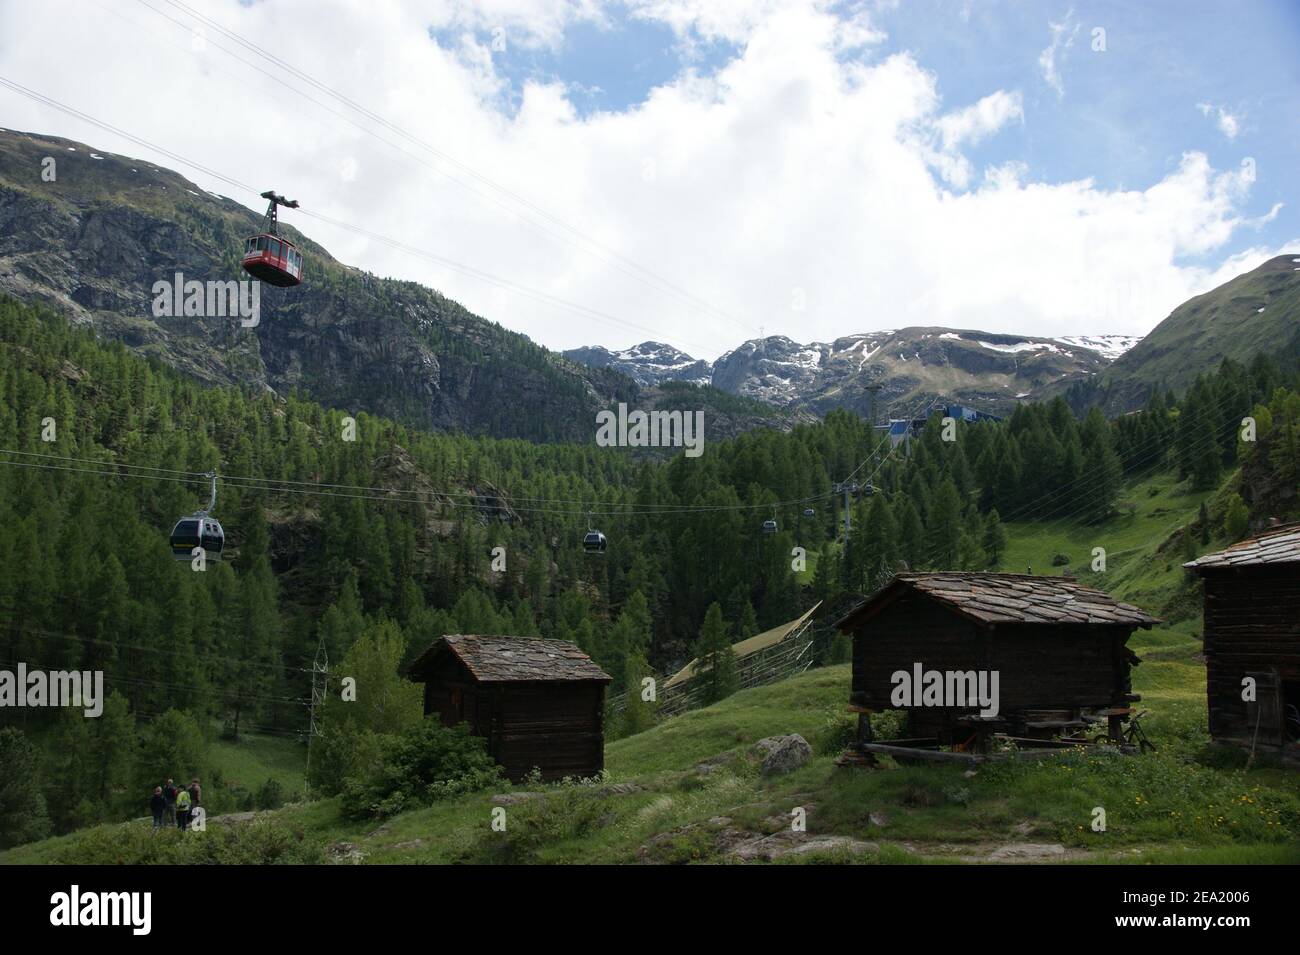 Swiss mountain huts beneath the cable car gondolas. Stock Photo